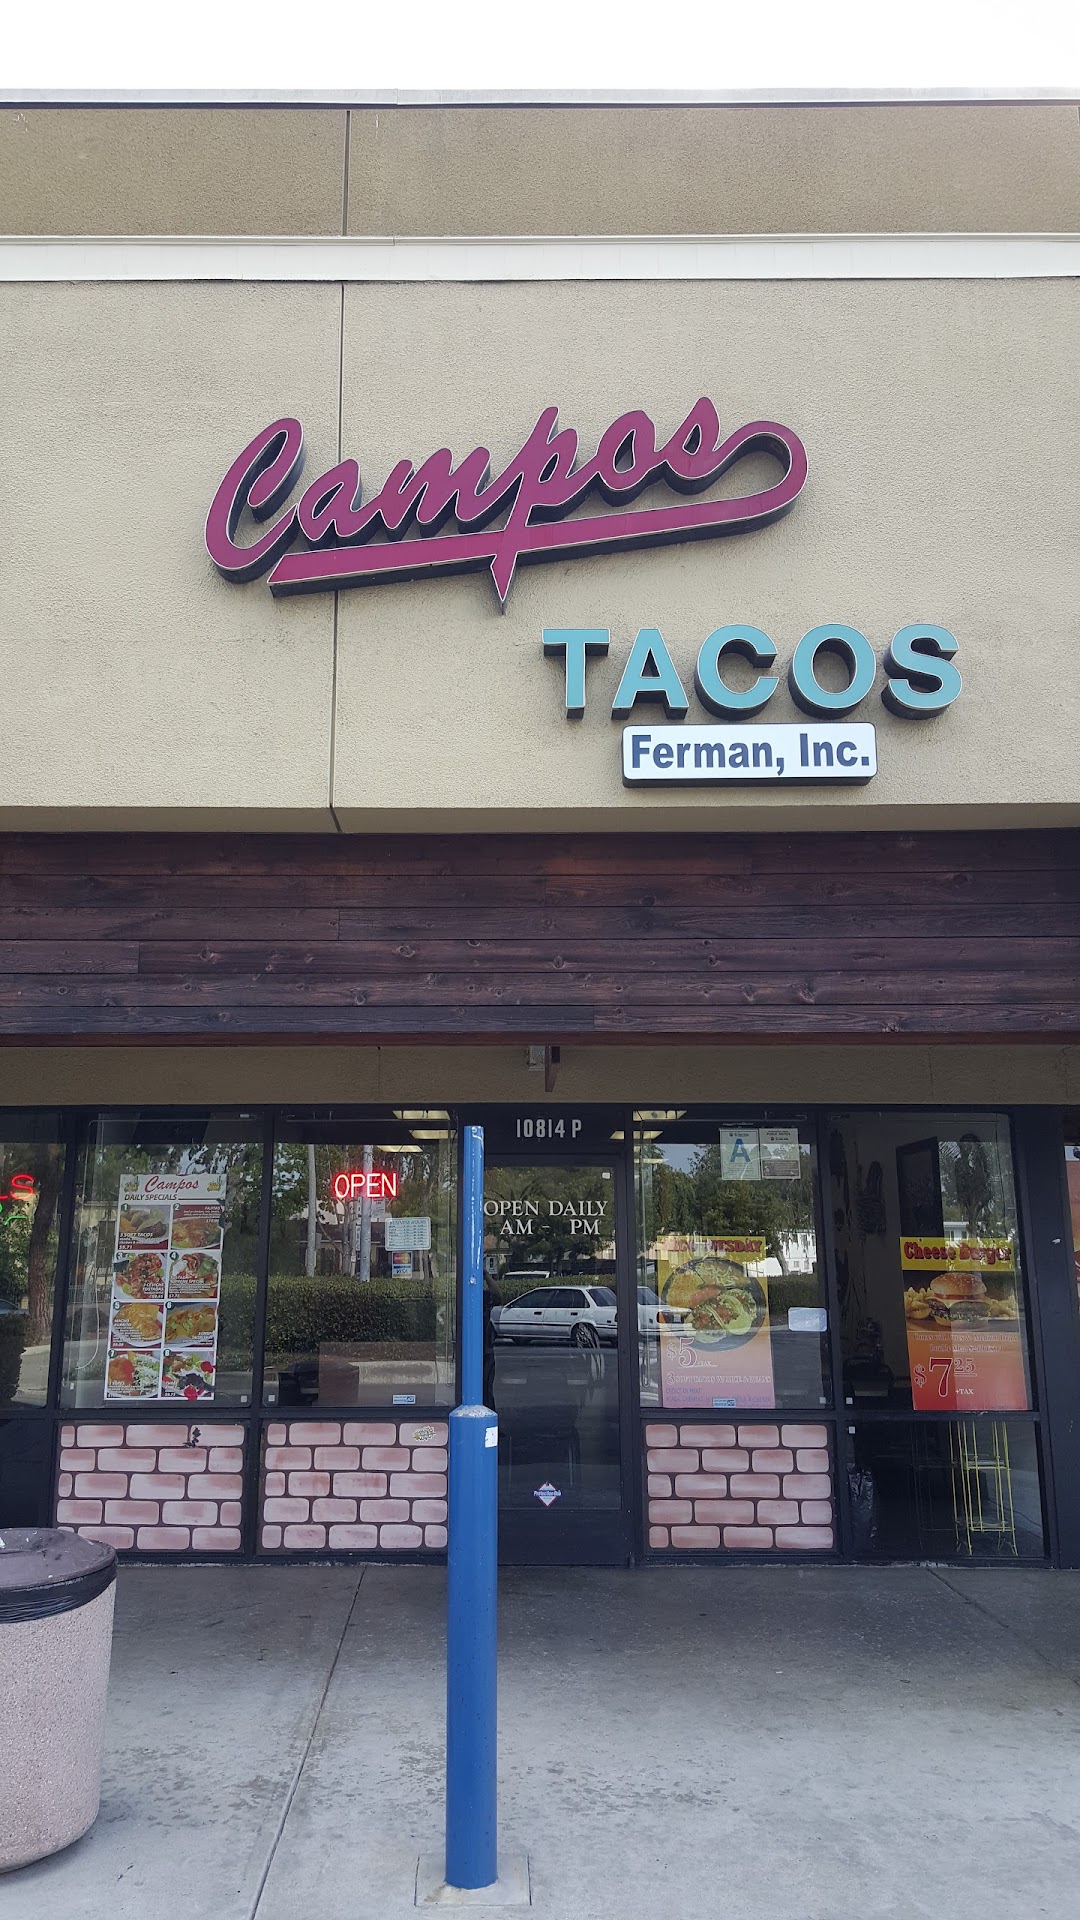 Campos Tacos Ferman Inc.